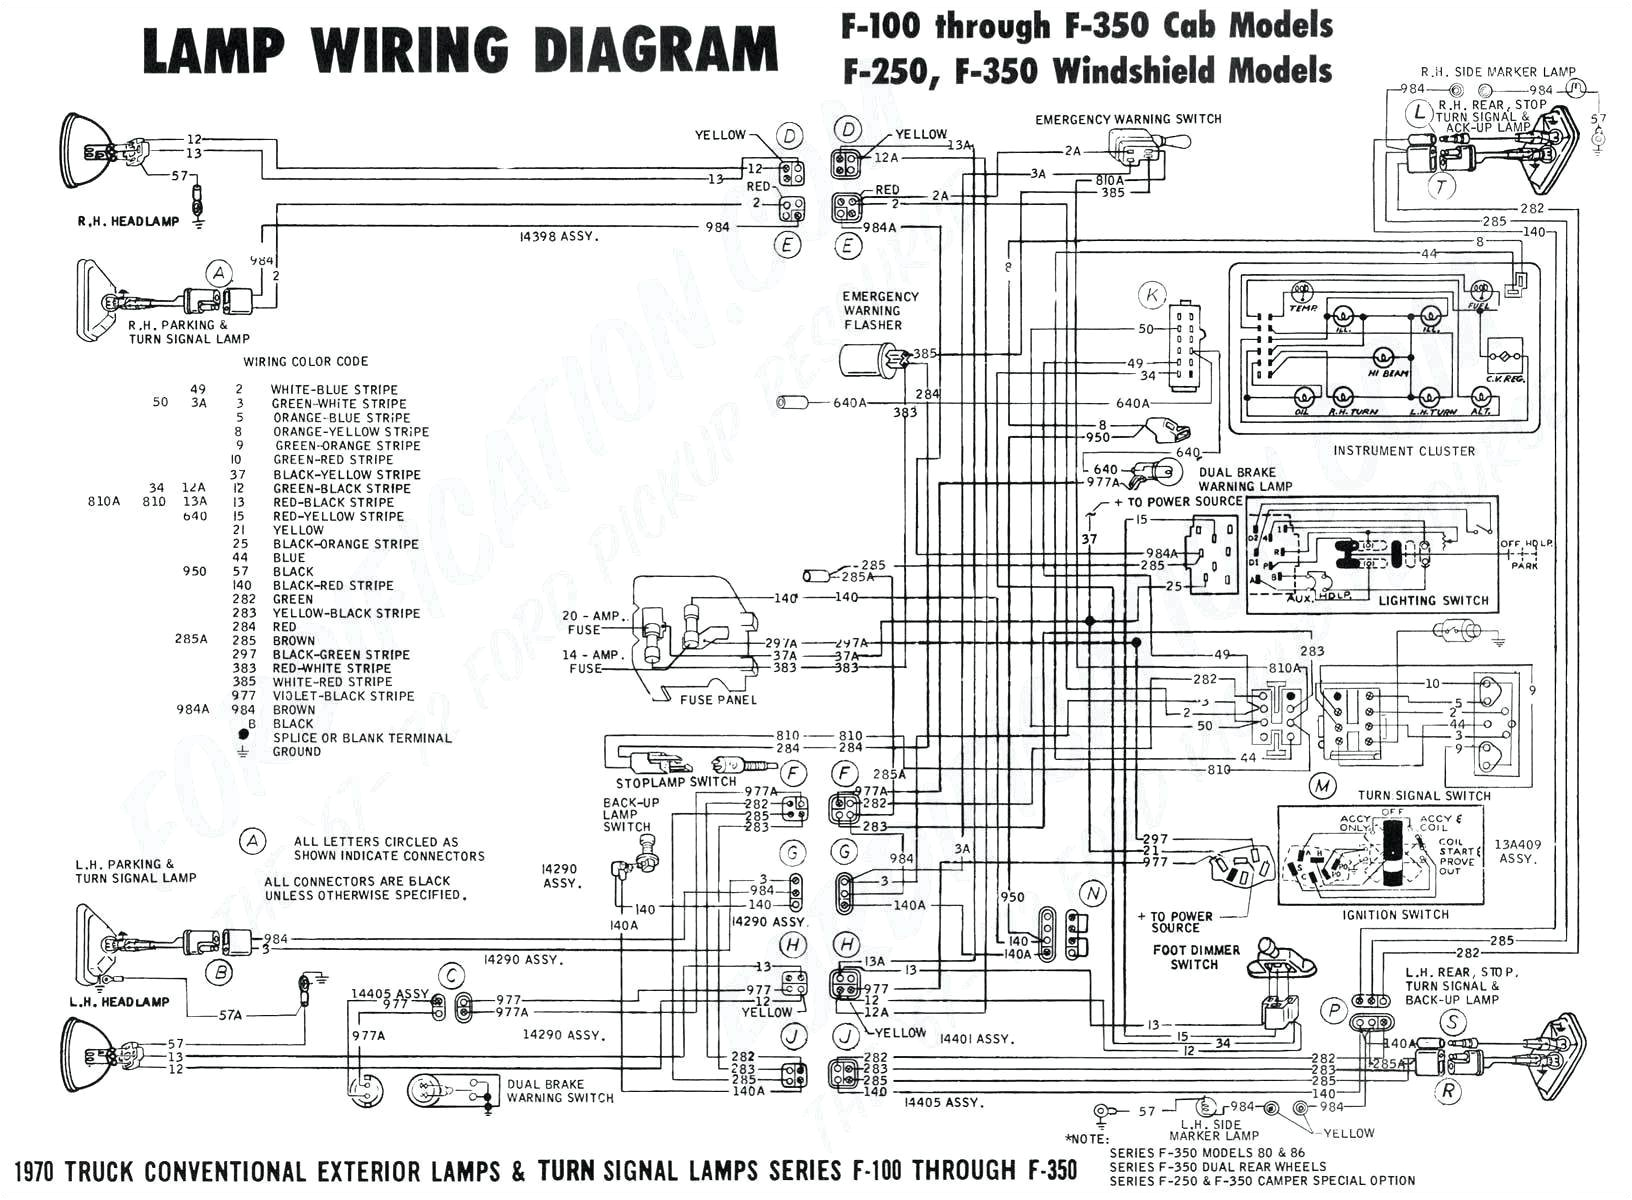 1989 chrysler lebaron power steering diagram wiring use wiring diagram 1994 suzuki samurai transmission diagram wiring schematic